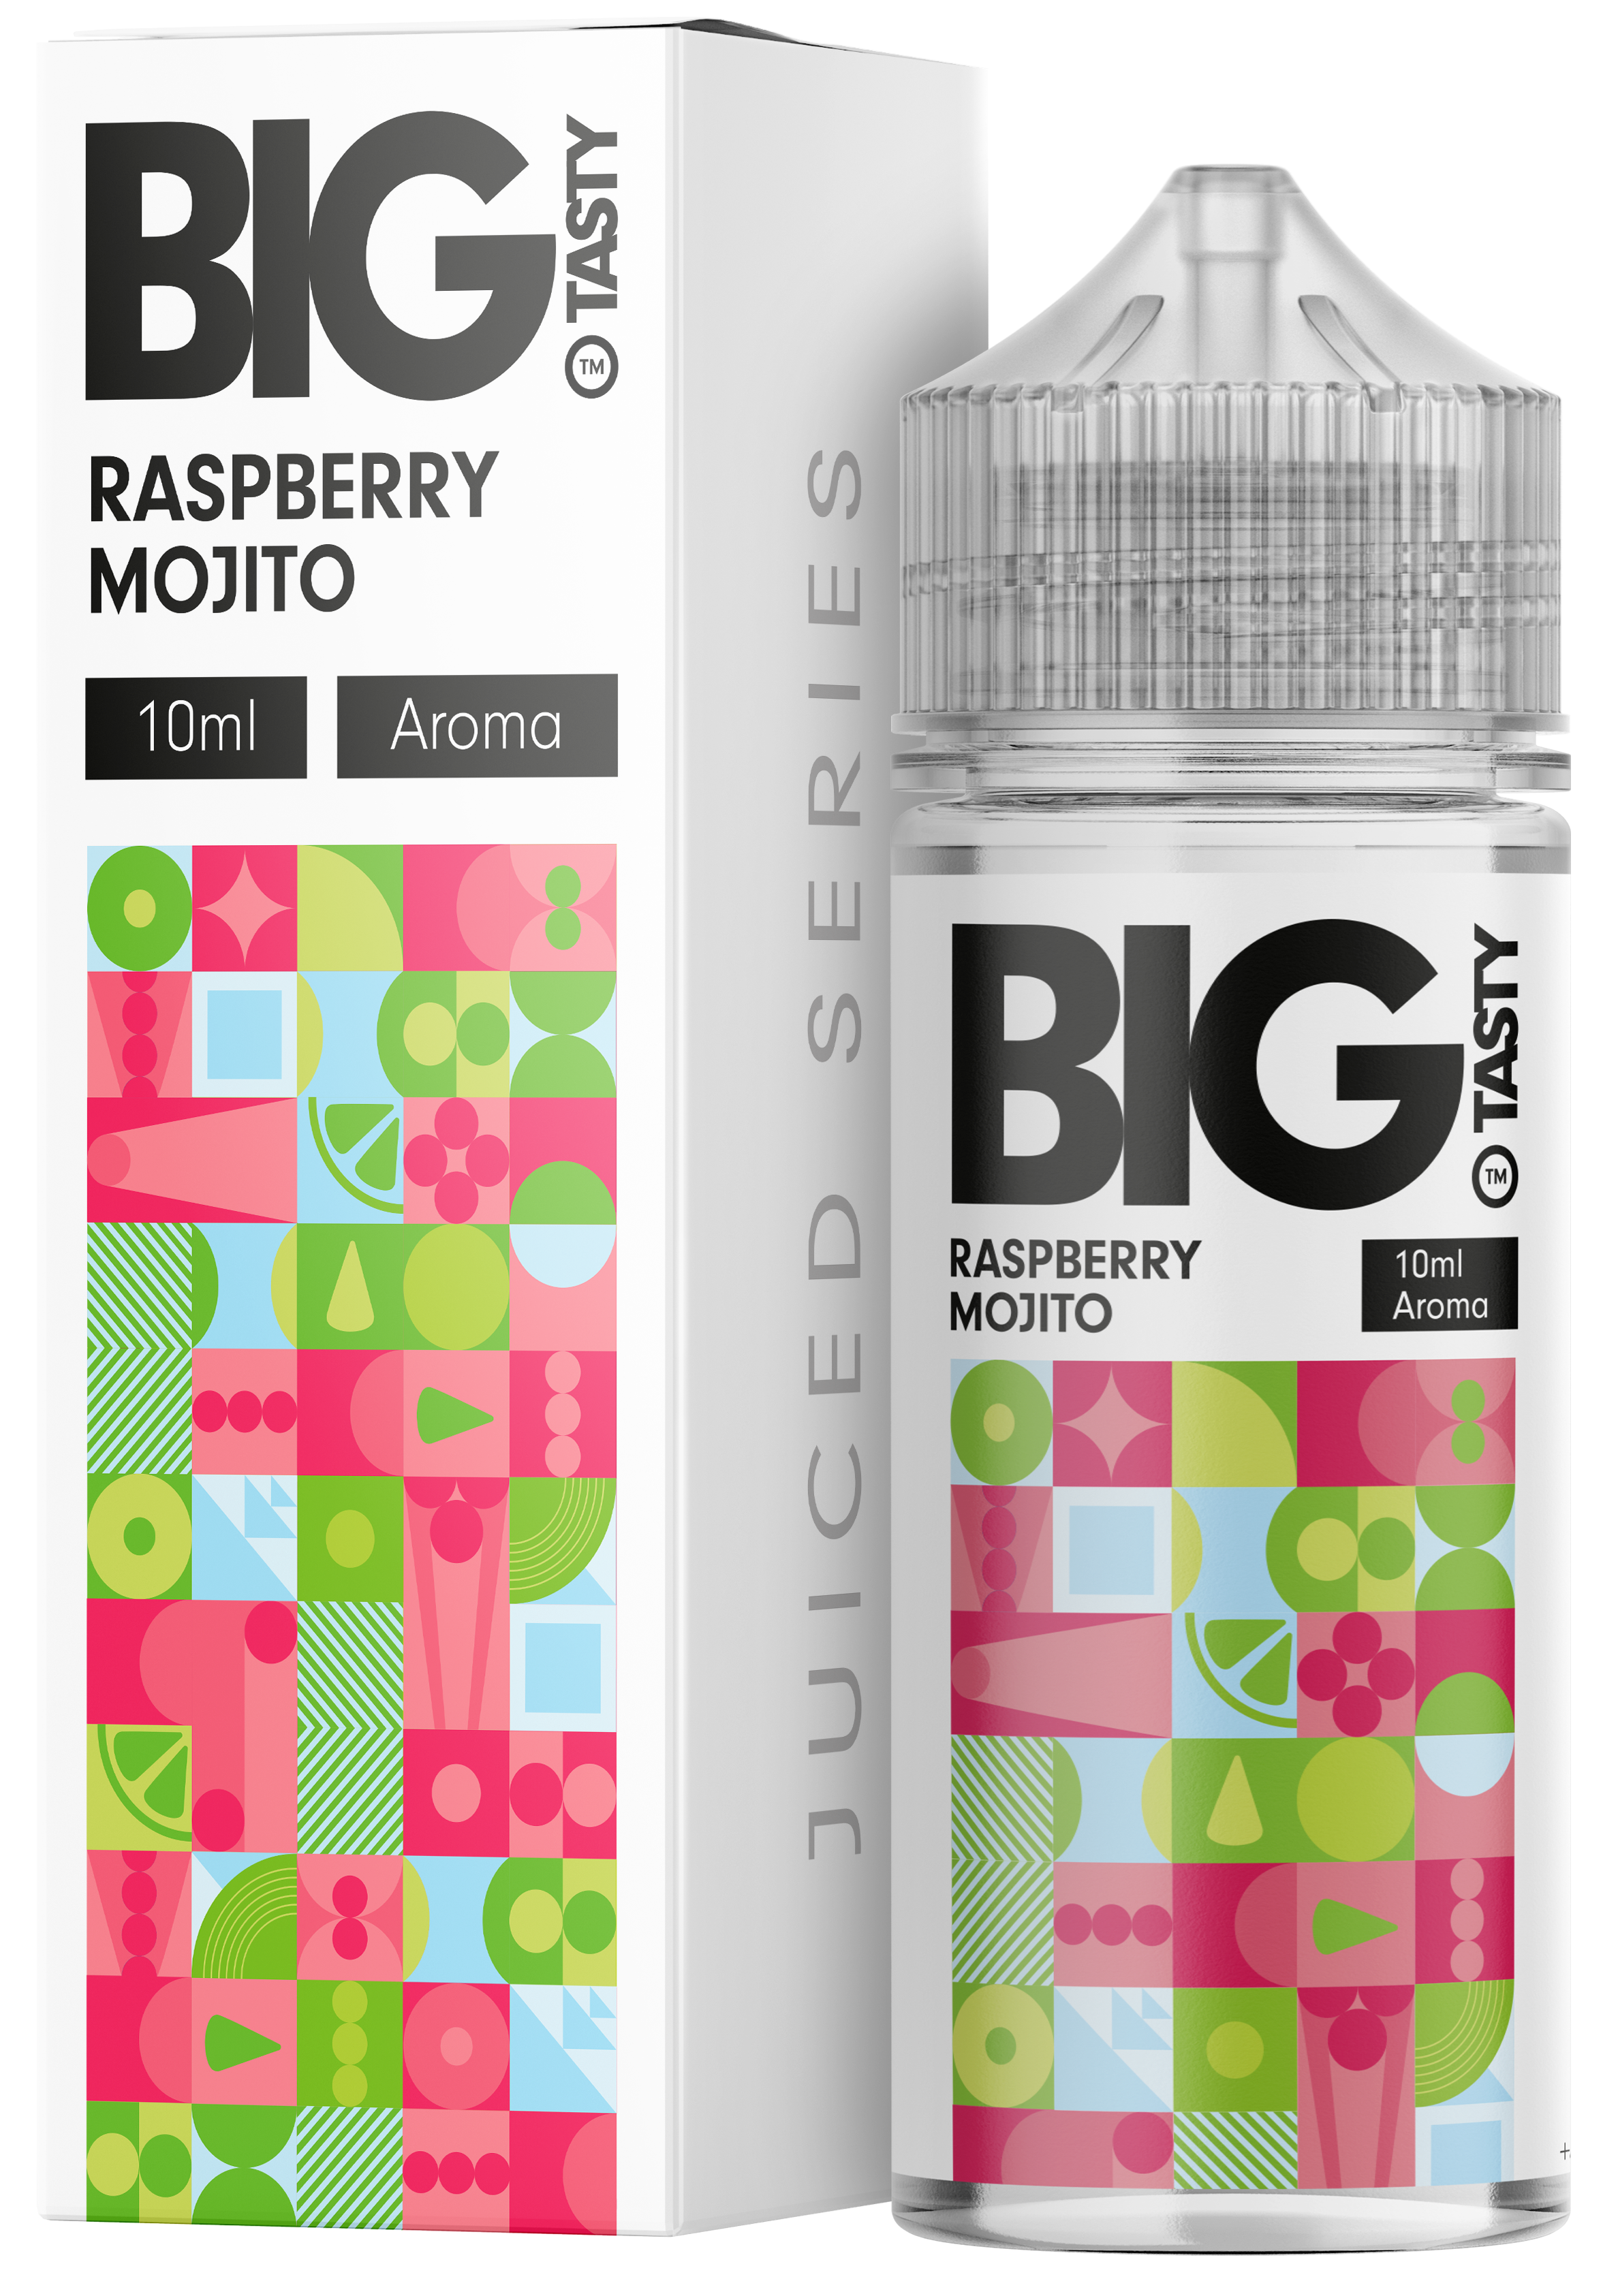 Big Tasty - Raspberry Mojito Aroma 10ml